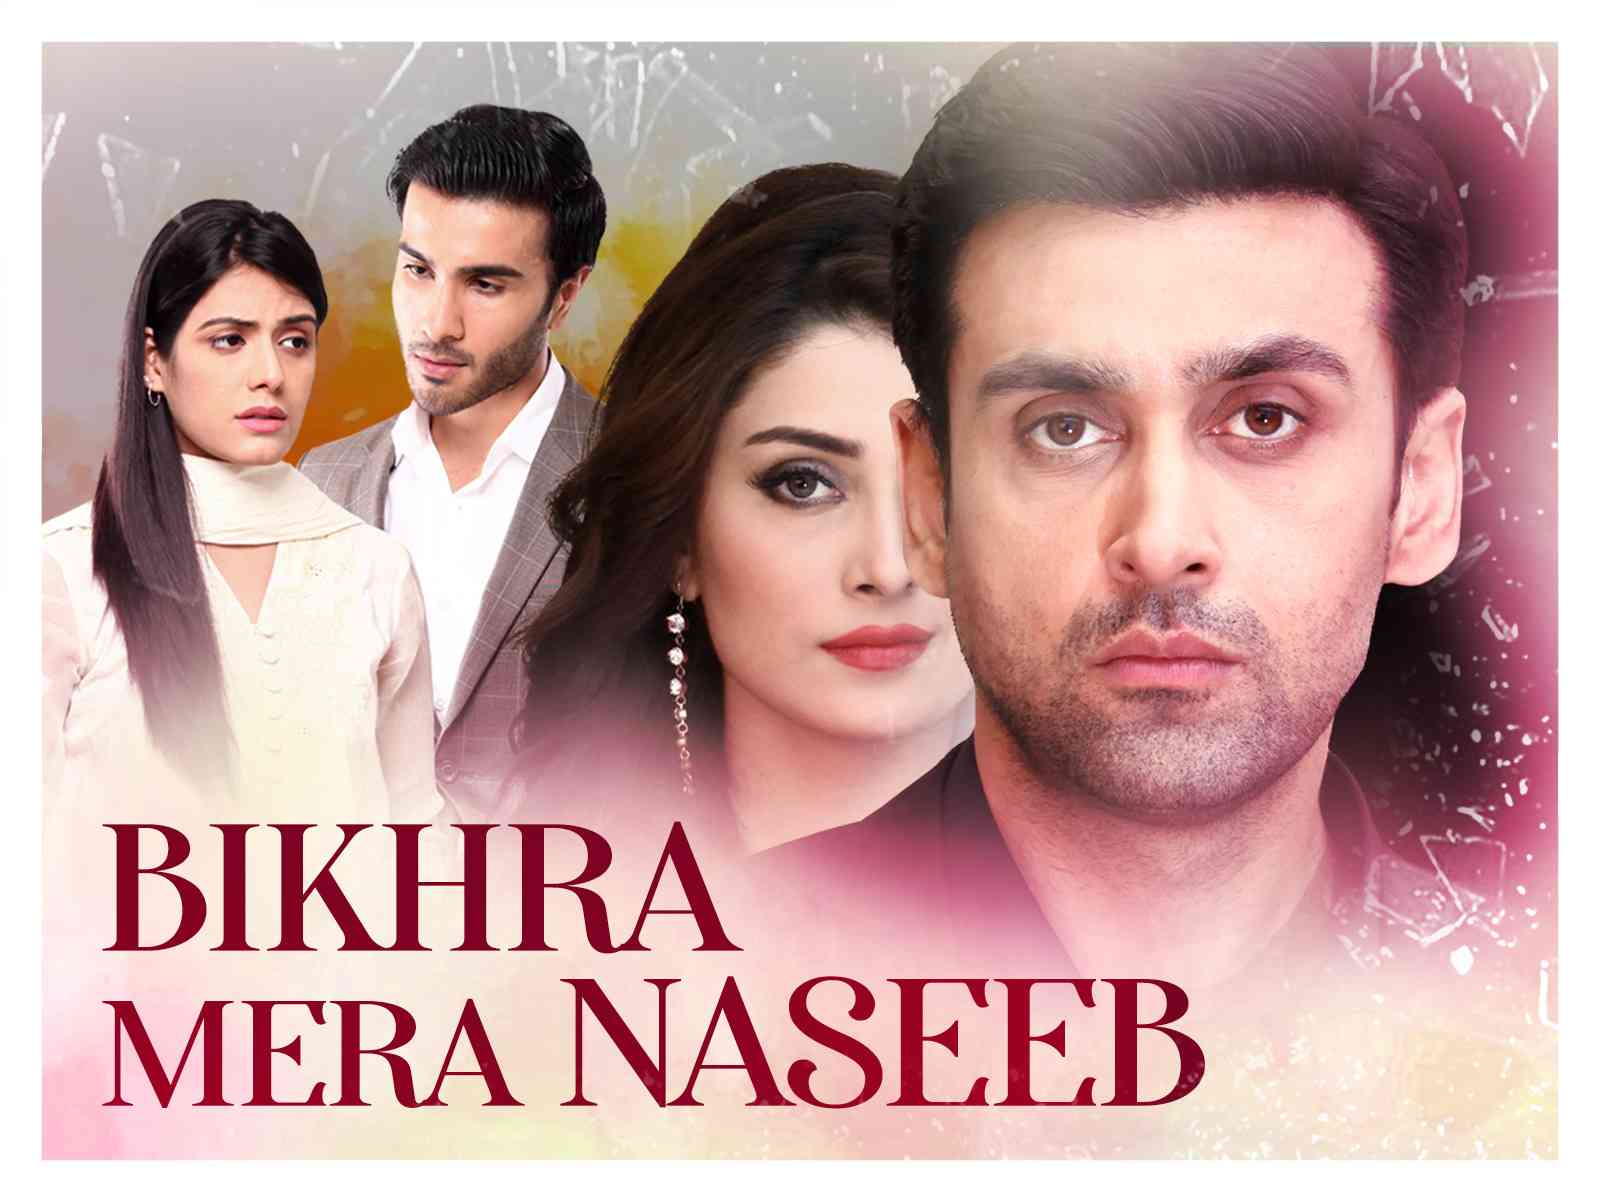 Bikhra Mera Naseeb Review